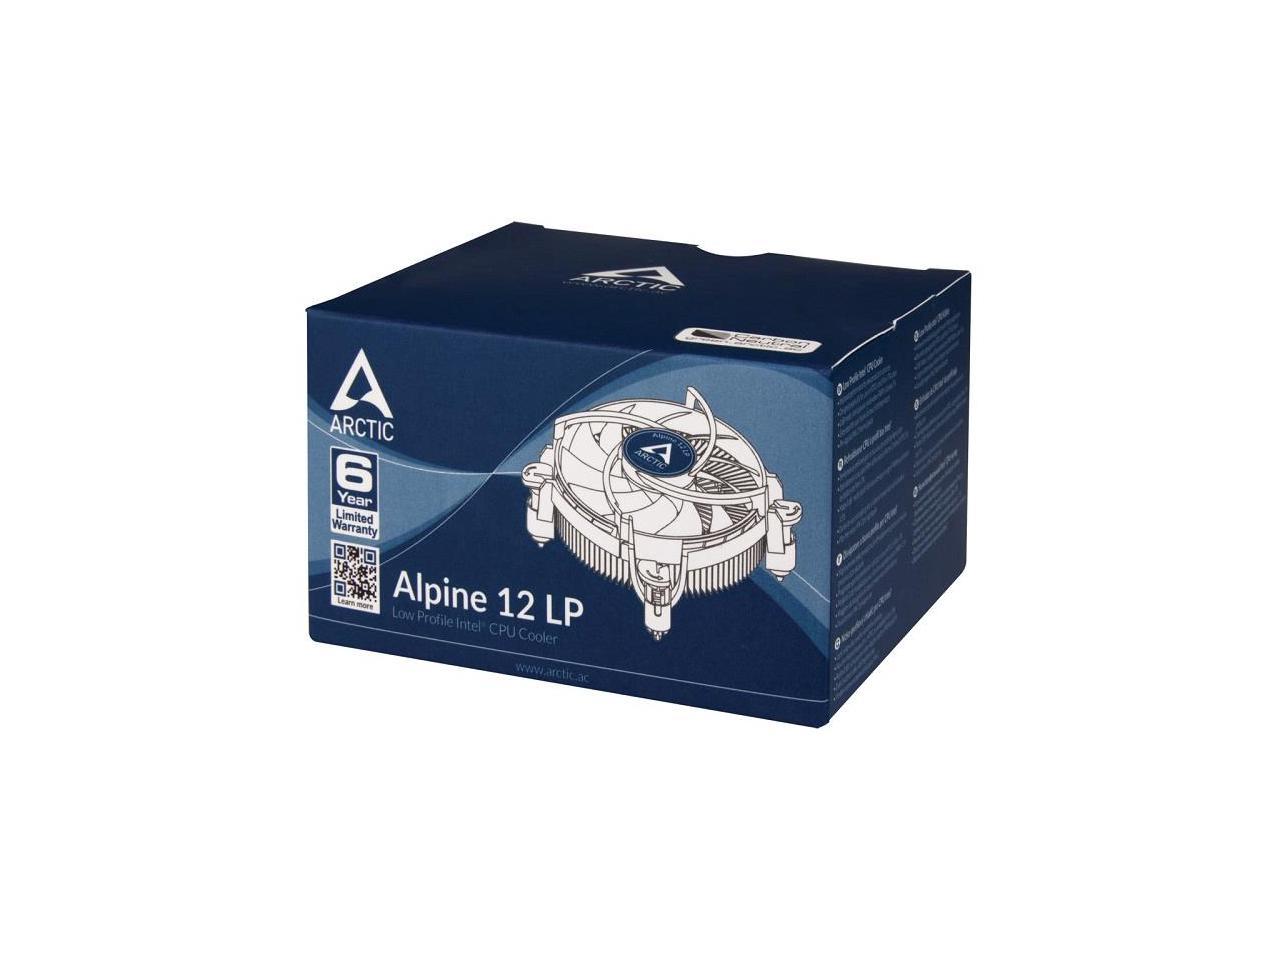 Arctic ACALP00029A Alpine 12 LP - Low Profile Intel CPU Cooler